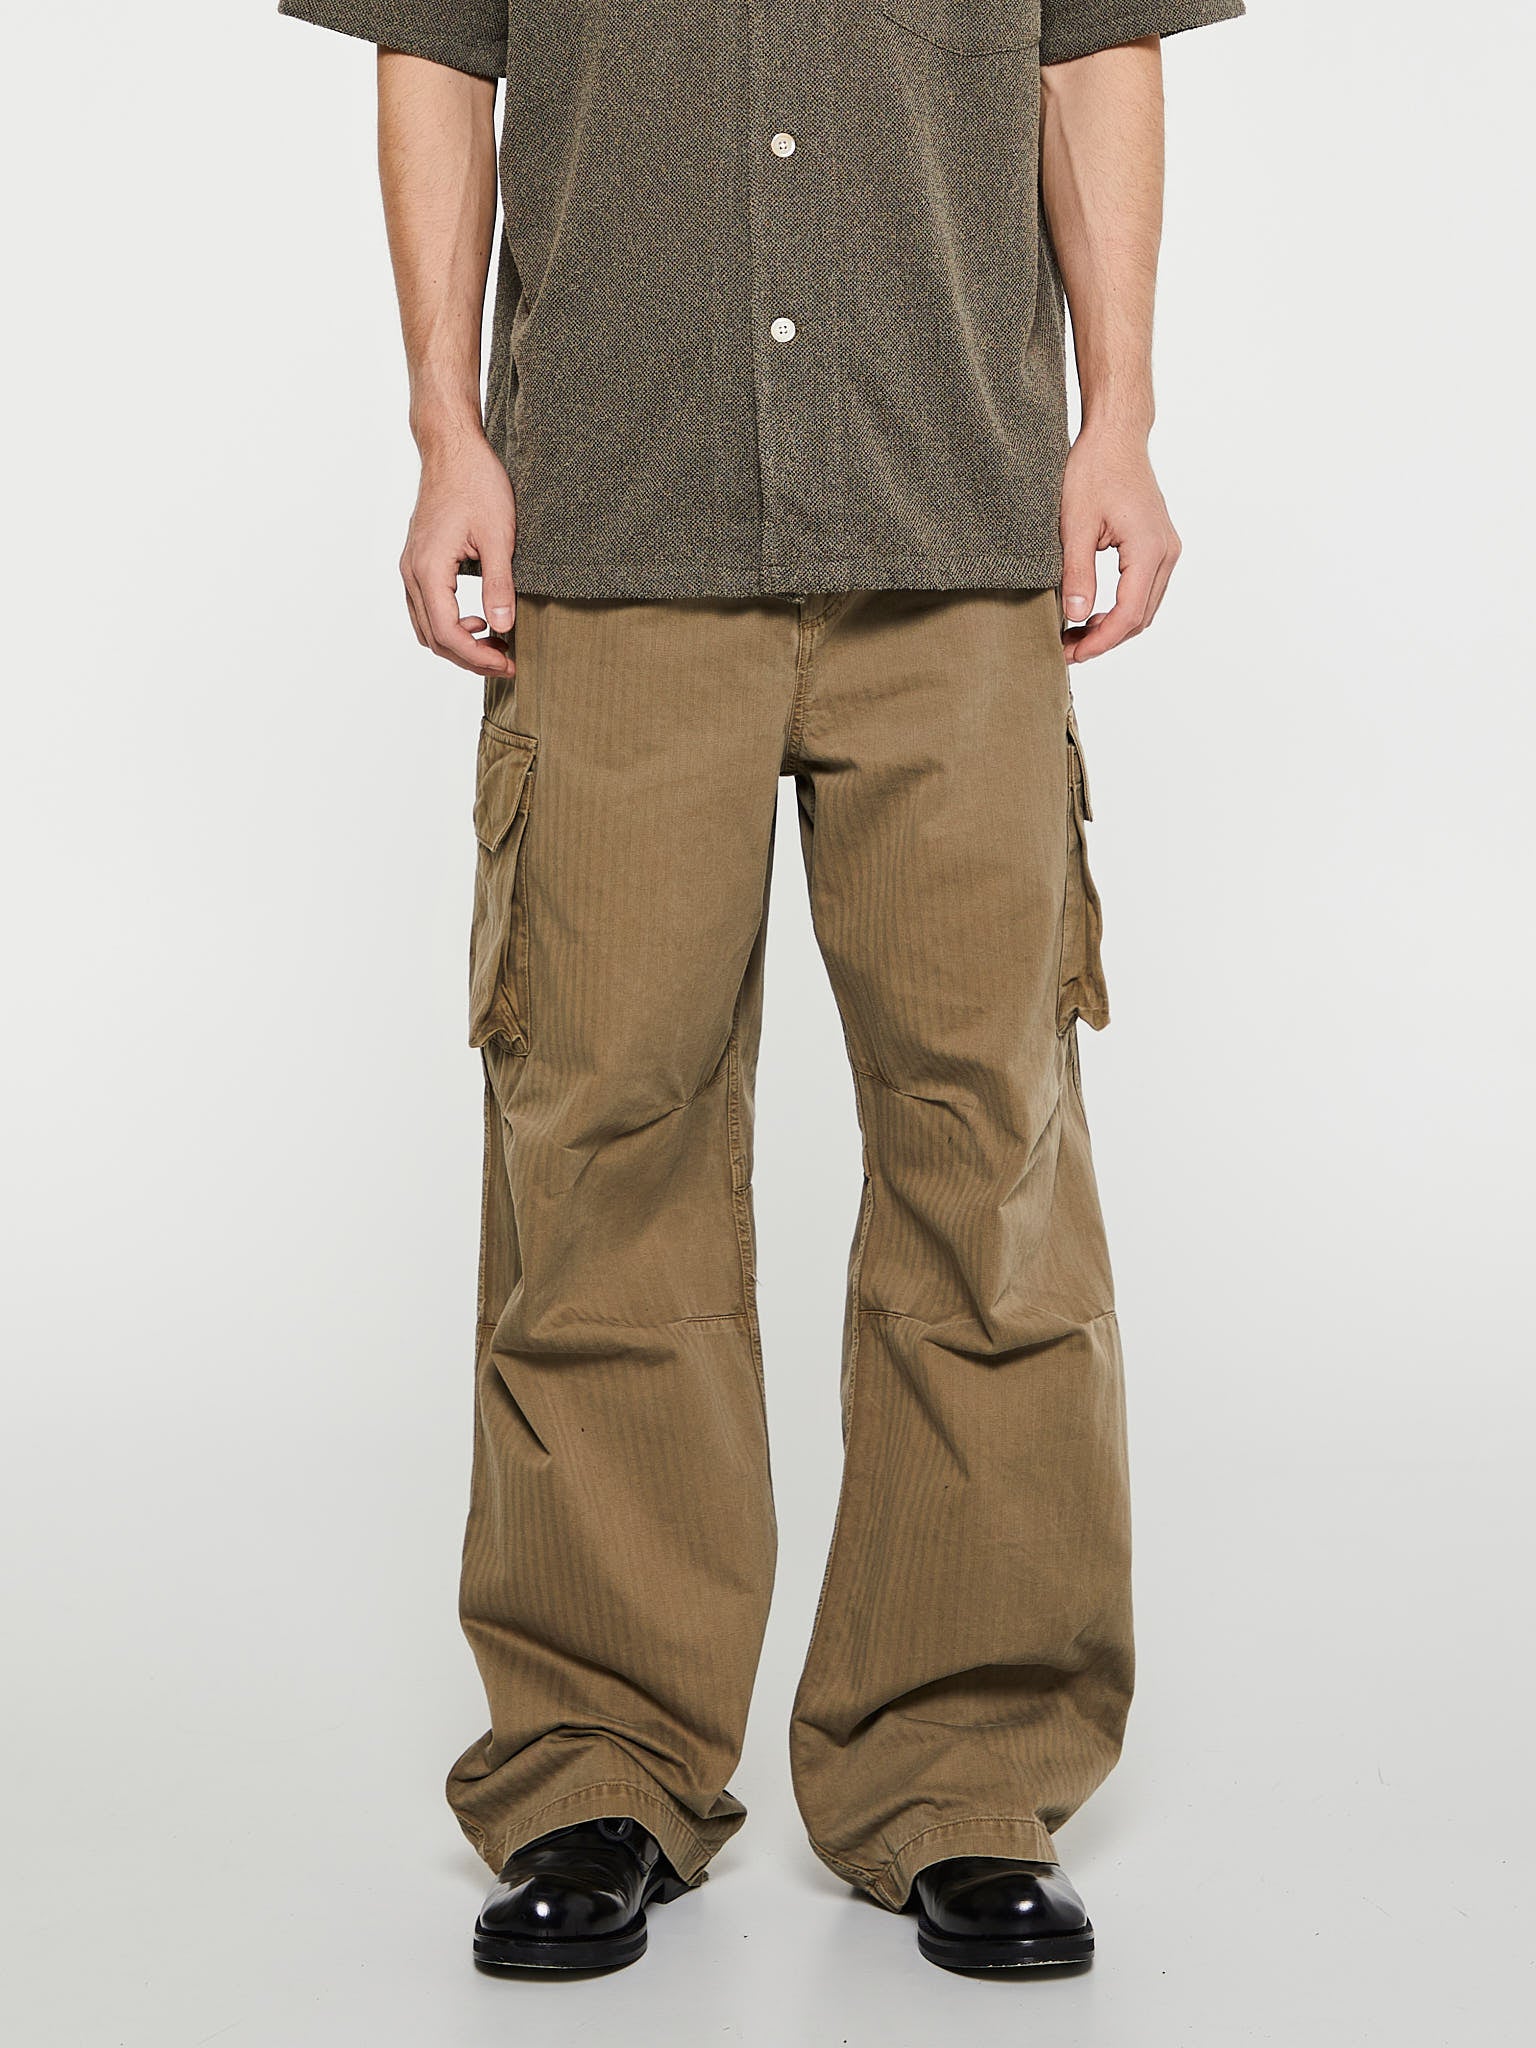 Our Legacy - Mount Cargo Pants in Uniform Olive Herringbone